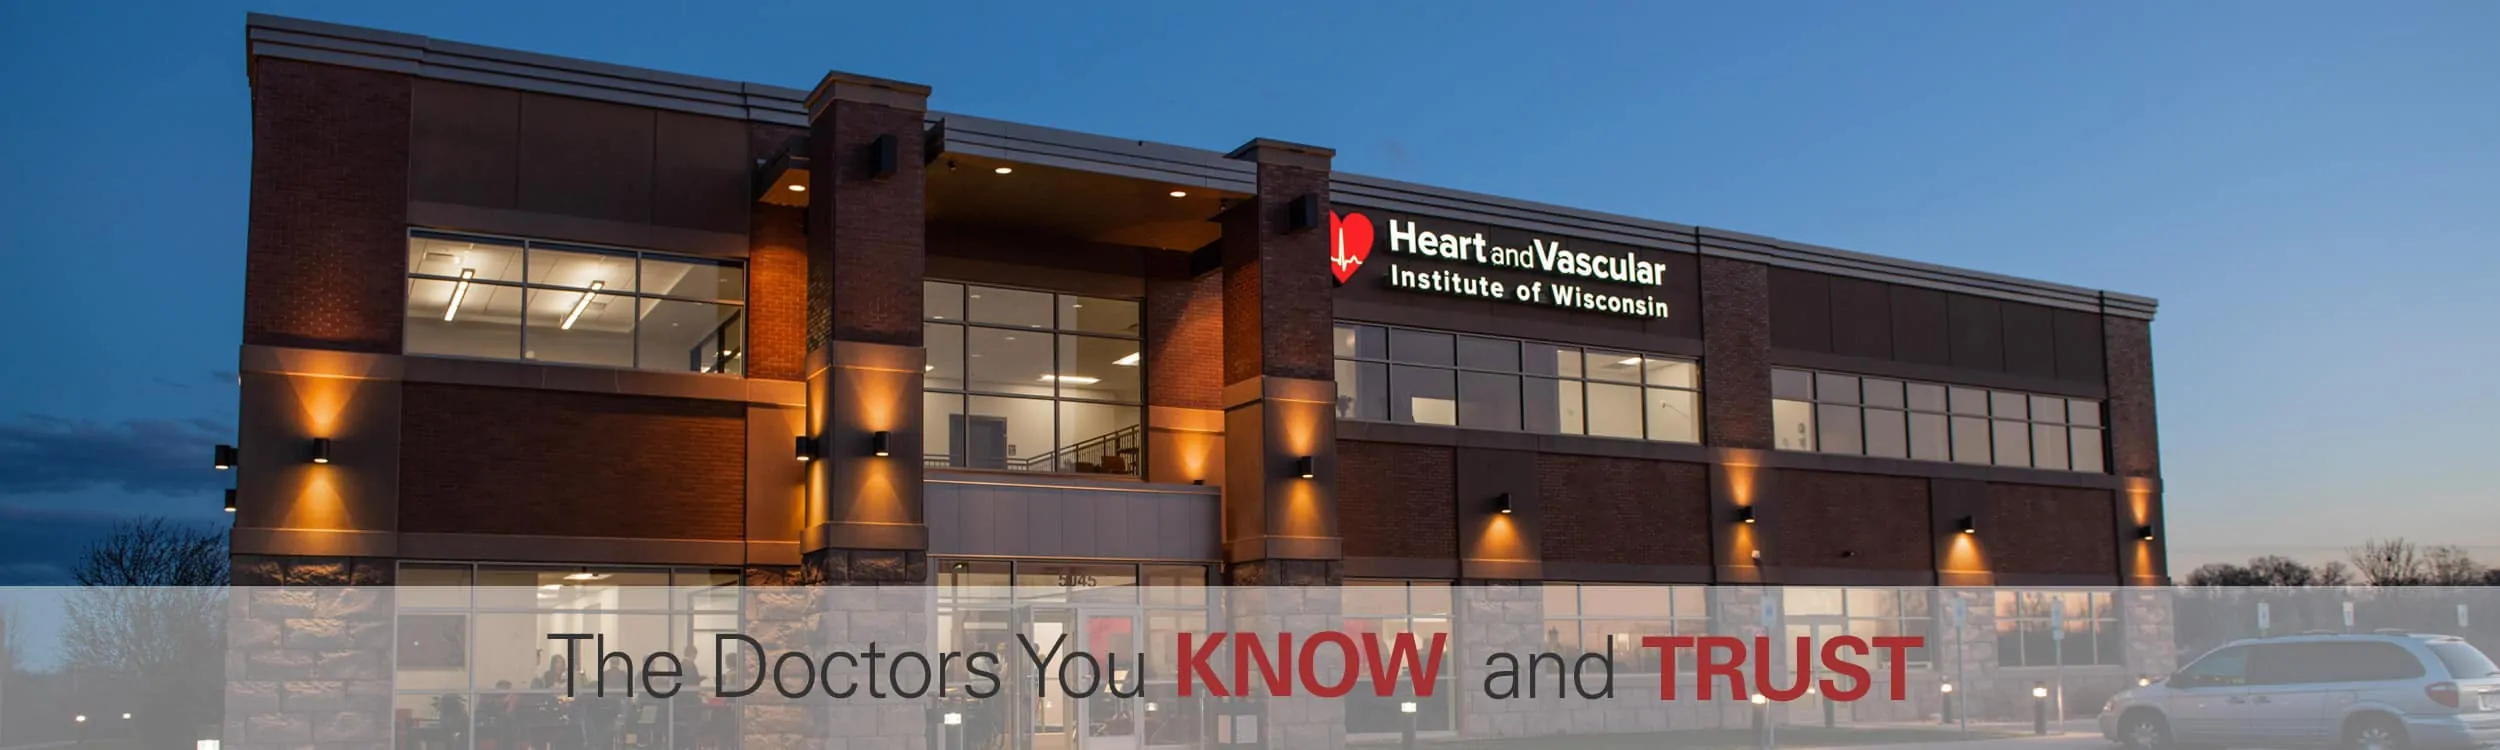 Heart and Vascular Institute of Wisconsin in Appleton, Wisconsin